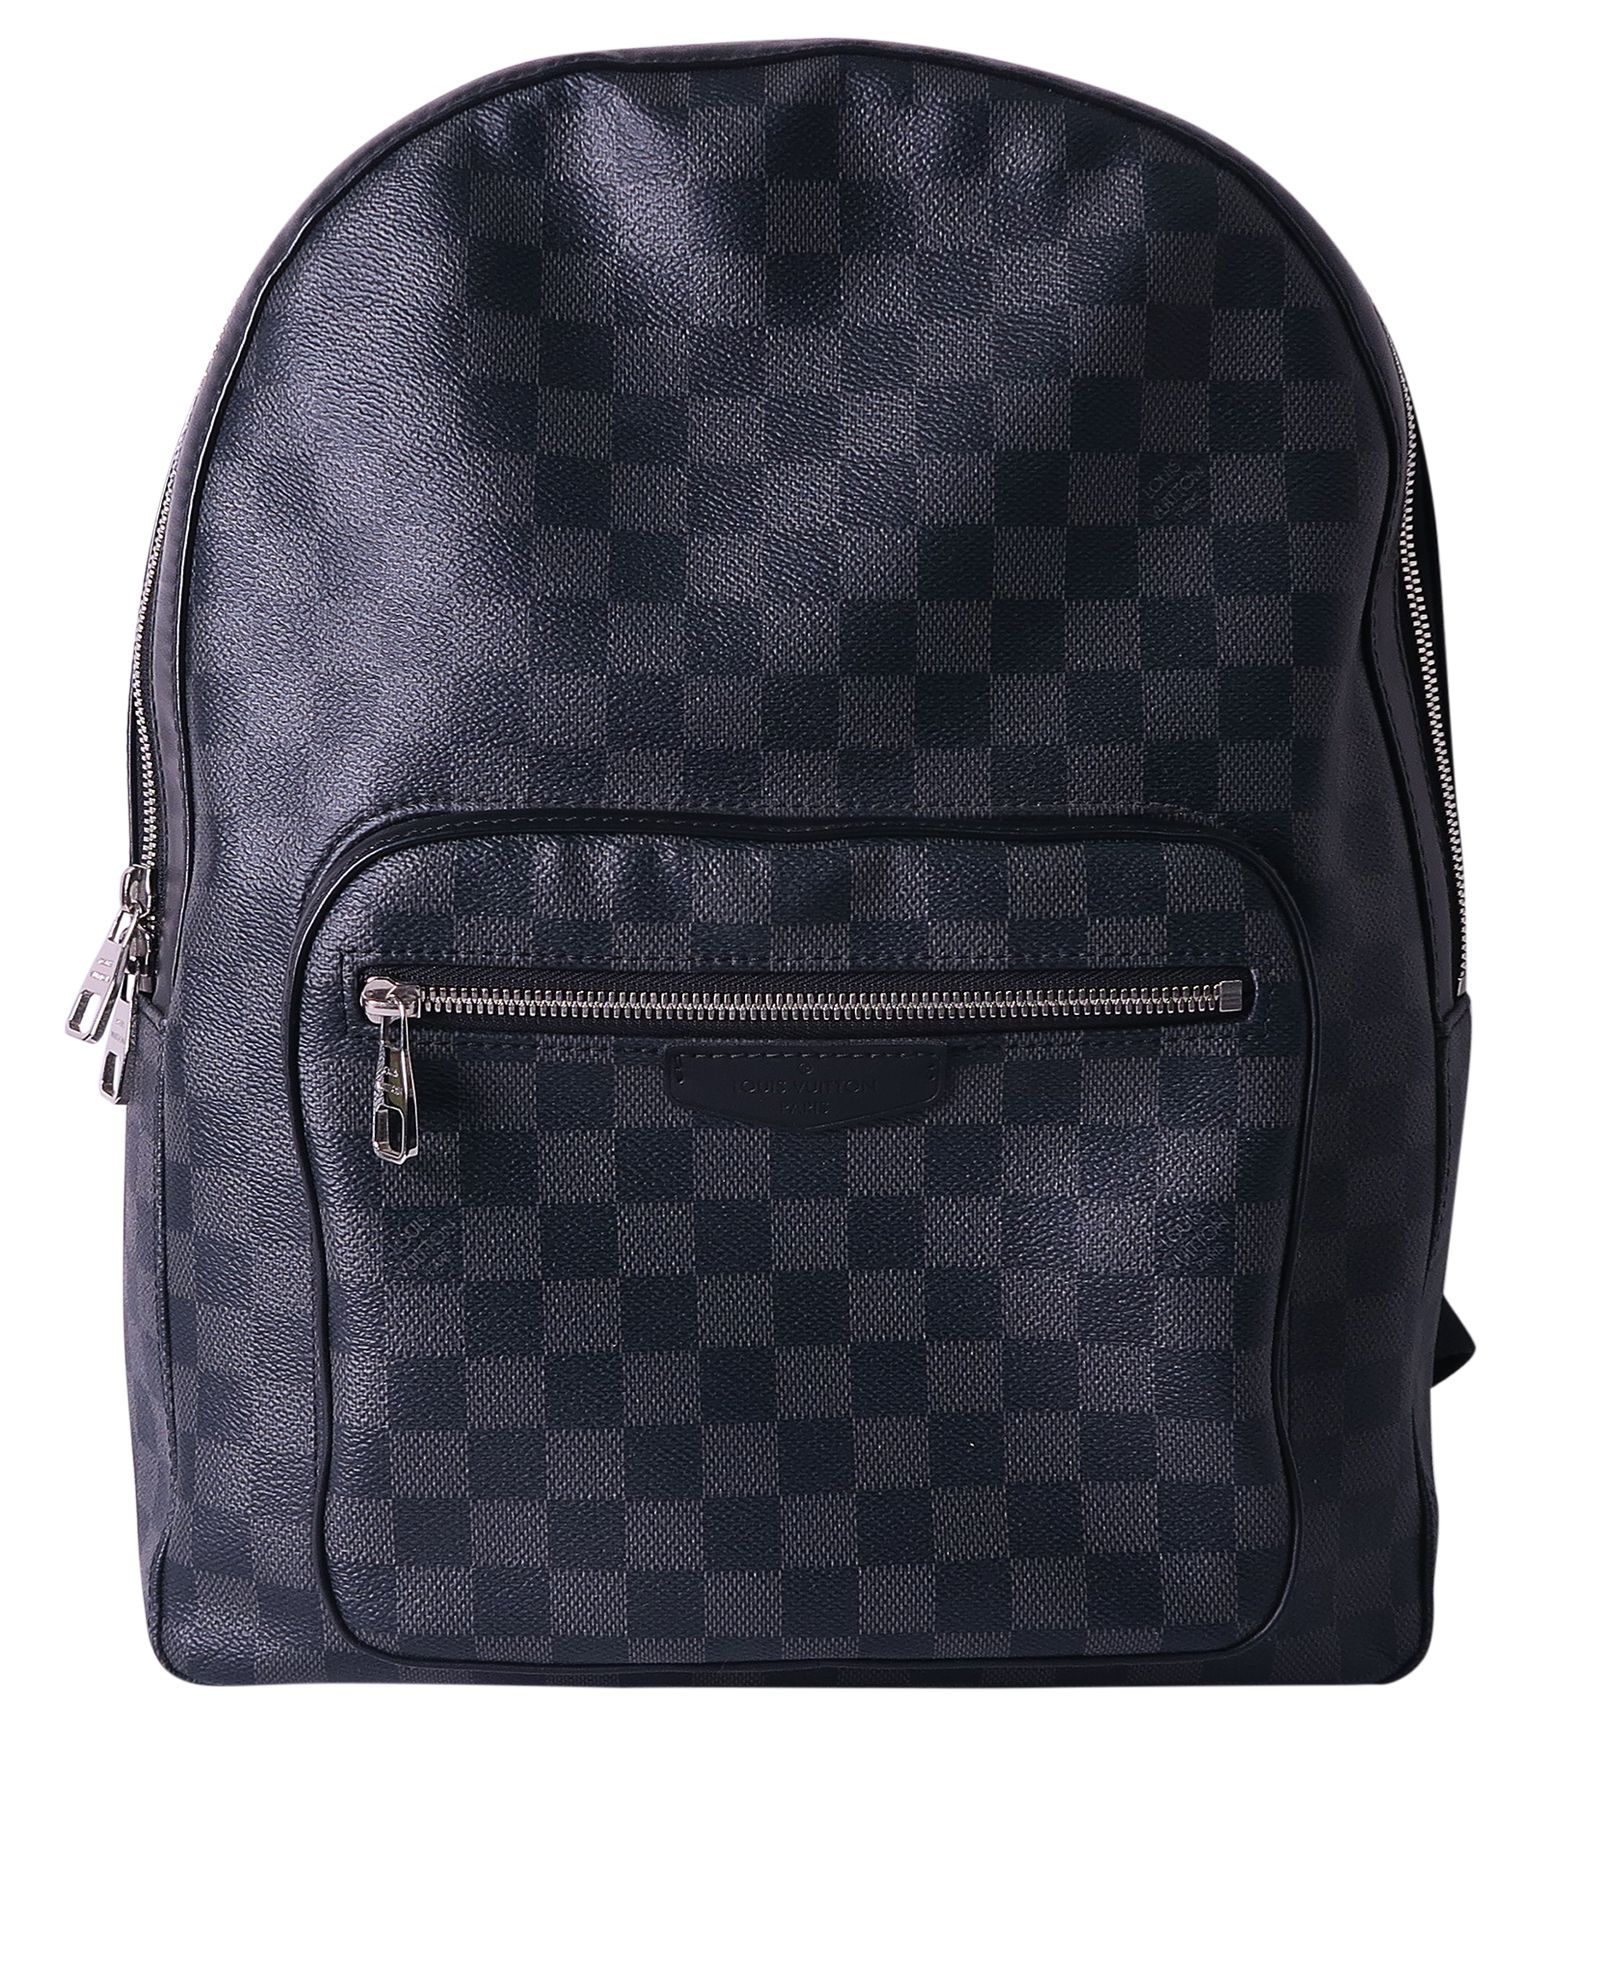 Josh Backpack best Louis Vuitton Backpack 